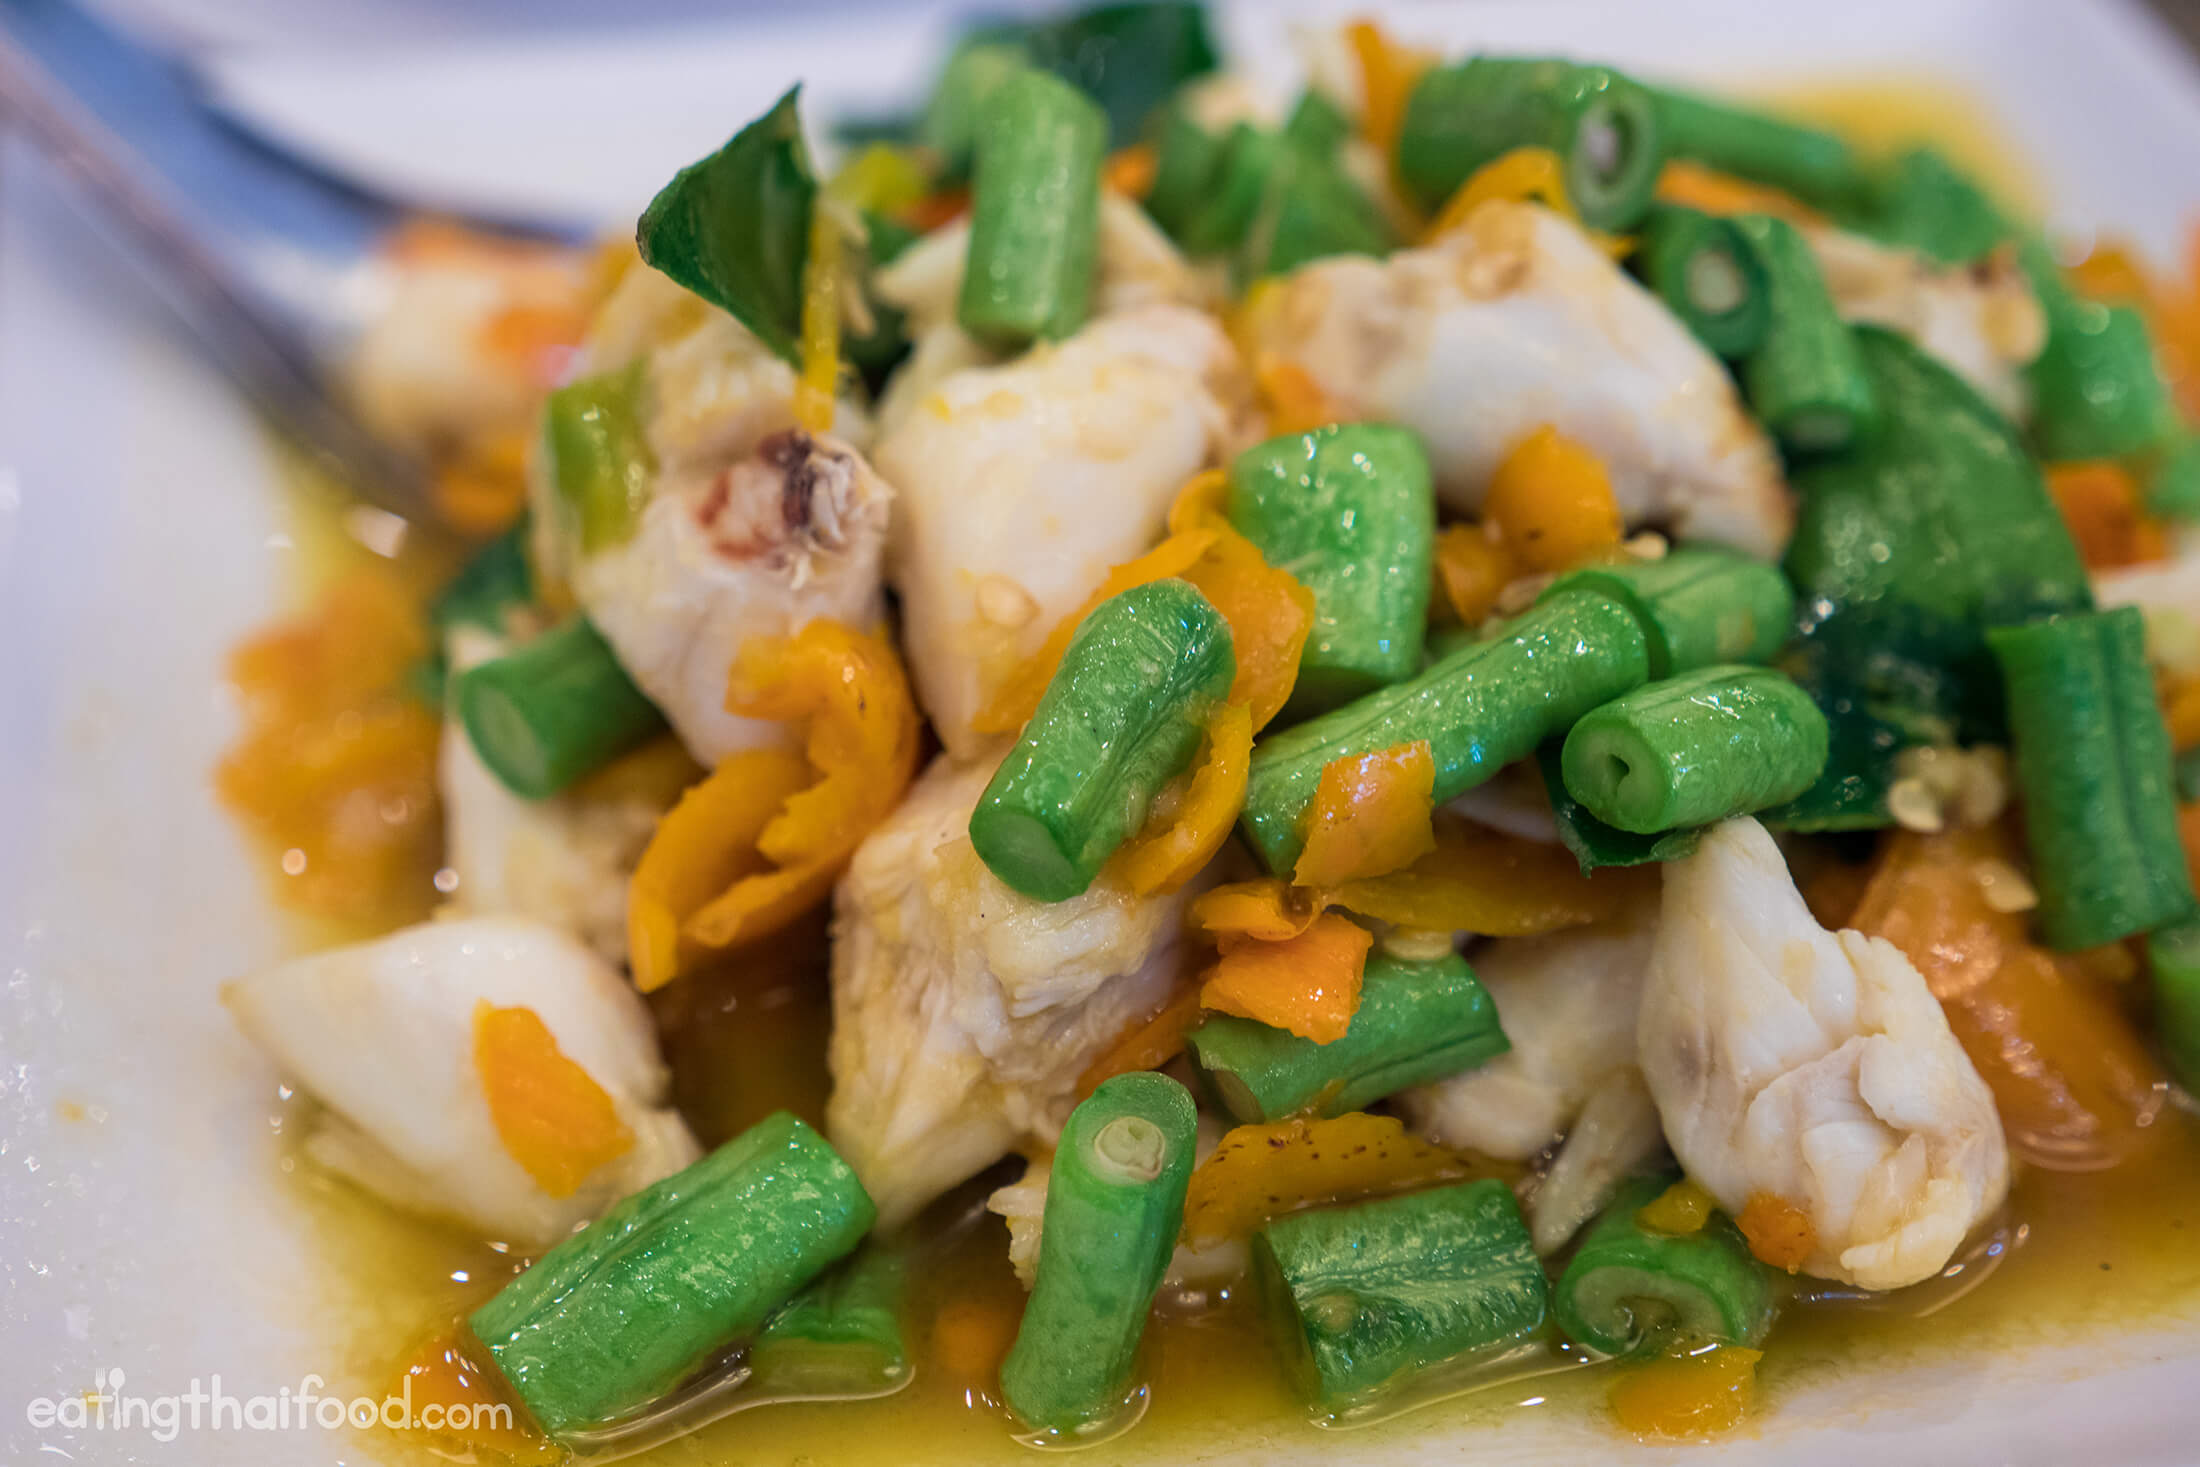 Krua Apsorn Restaurant in Bangkok – Don’t Miss the Crab Meat!